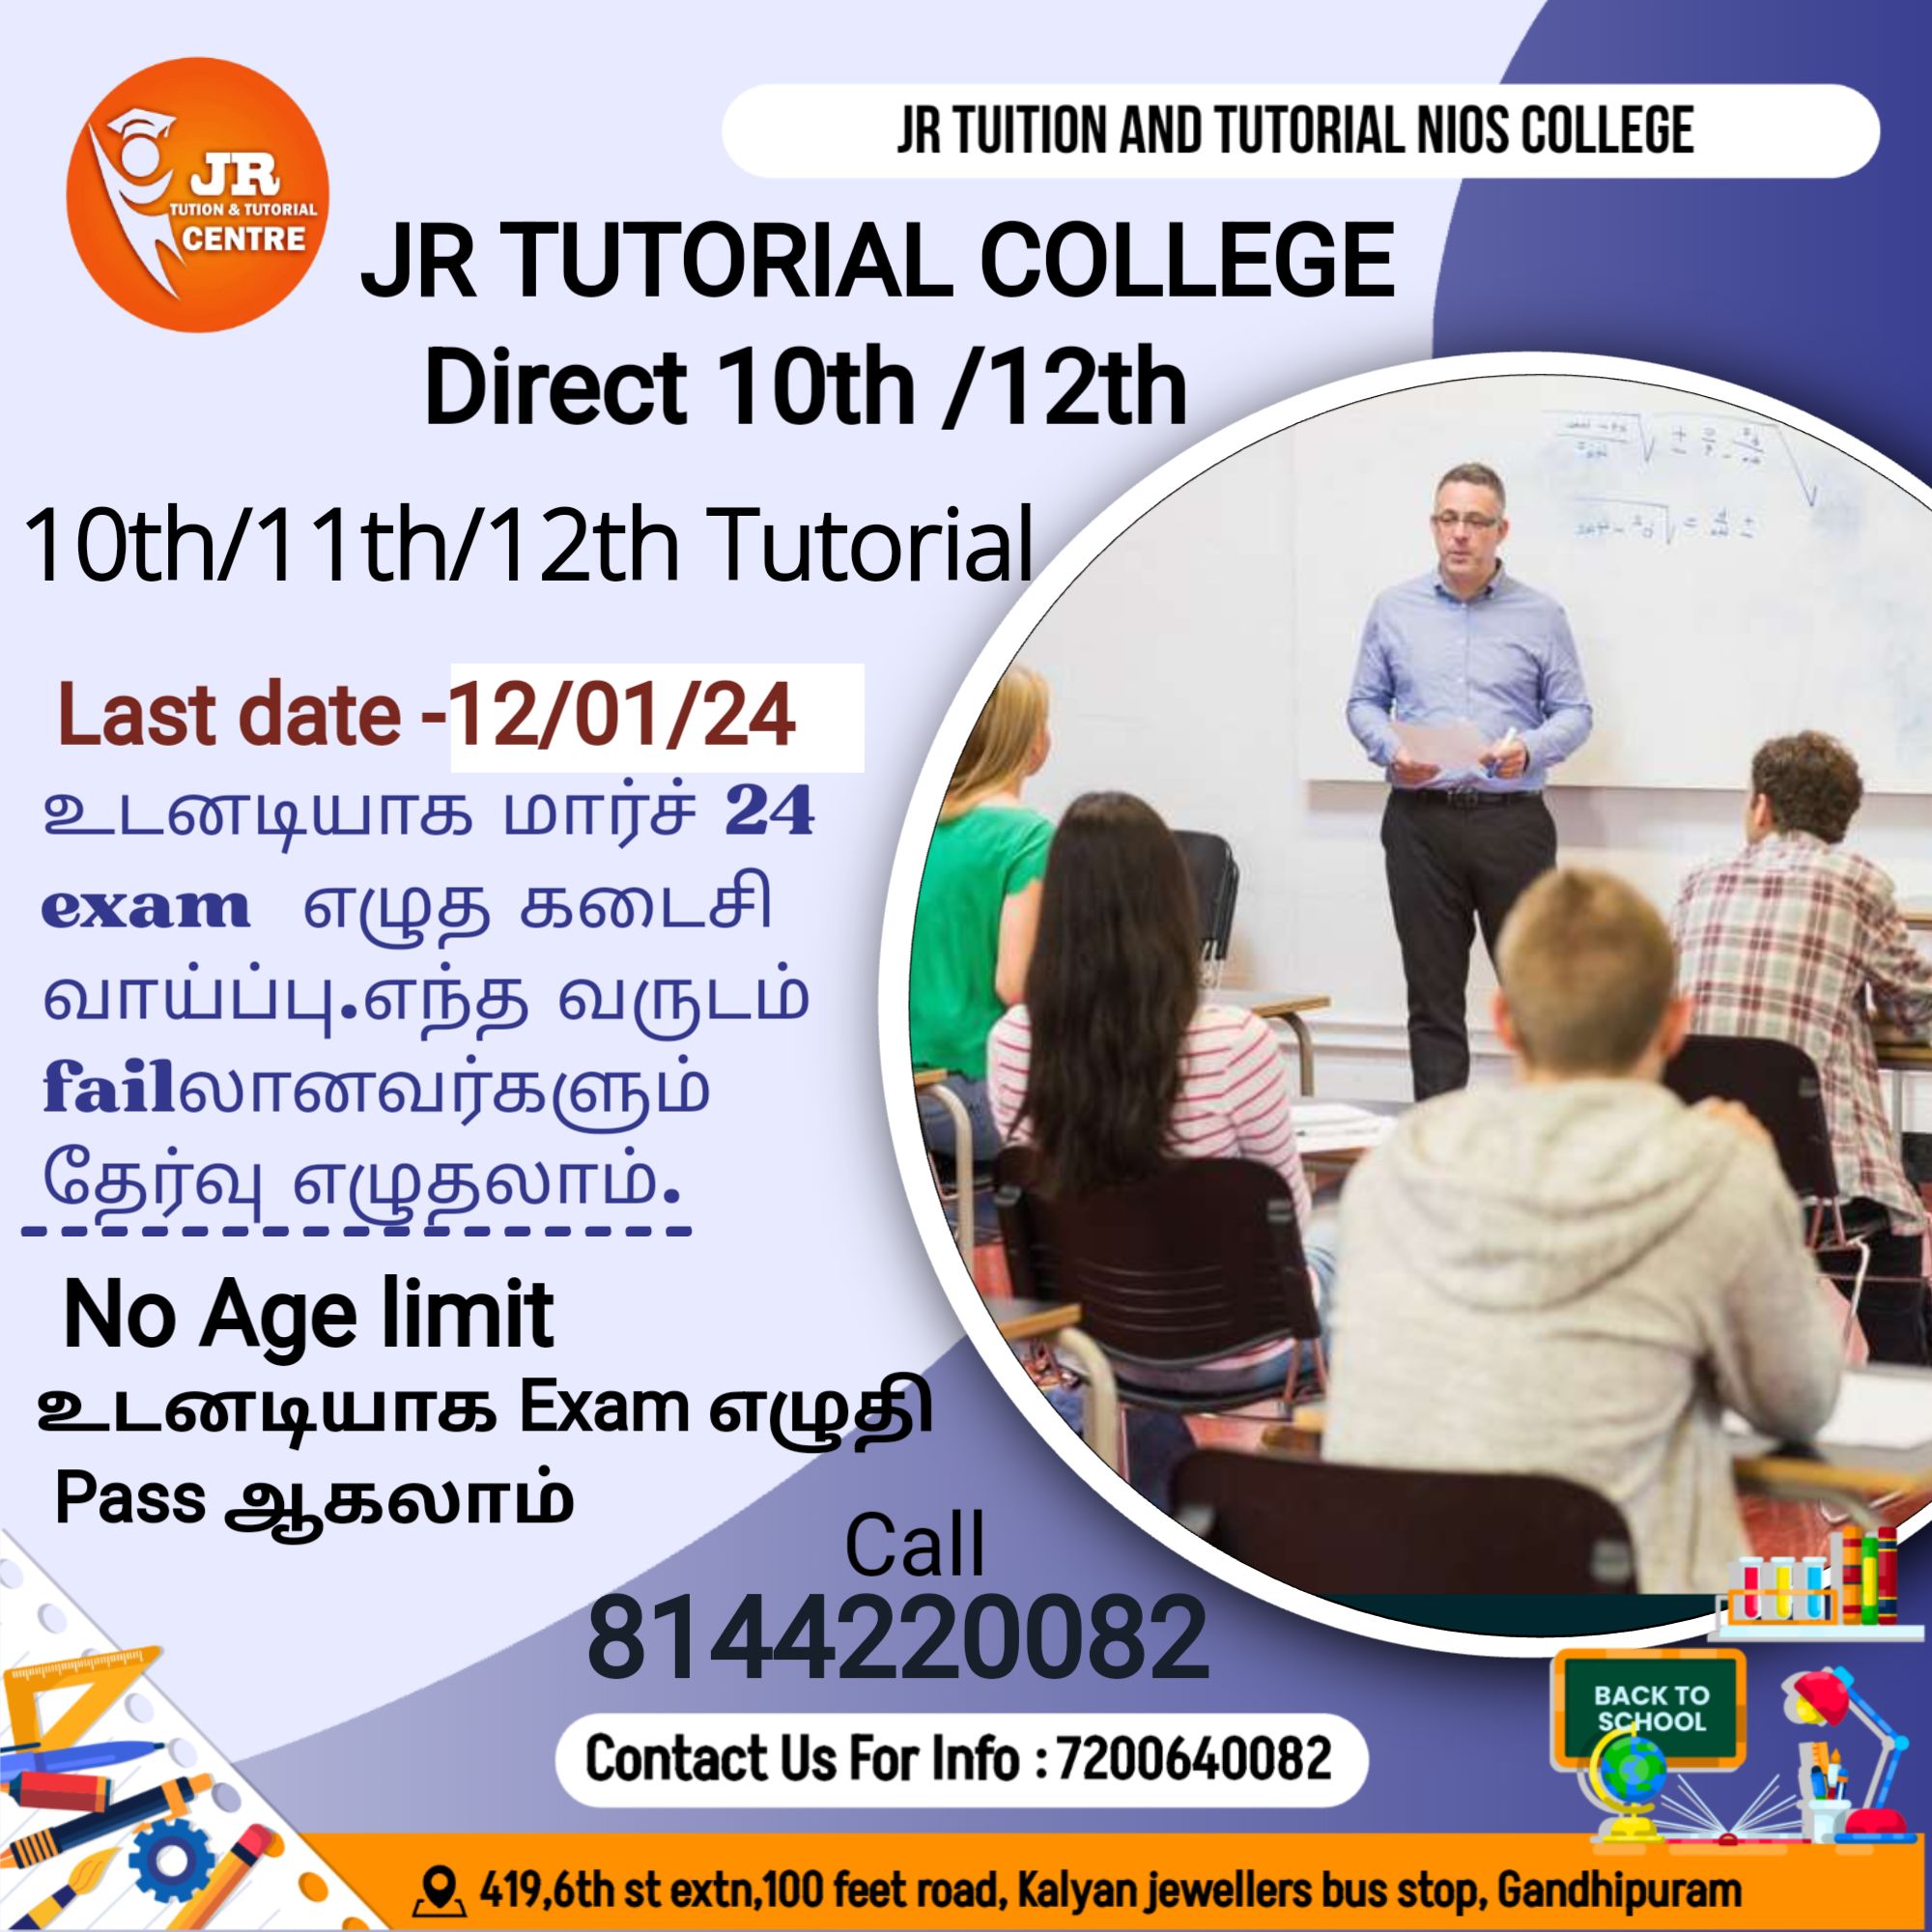 10th 11th 12th tutorial college in Coimbatore